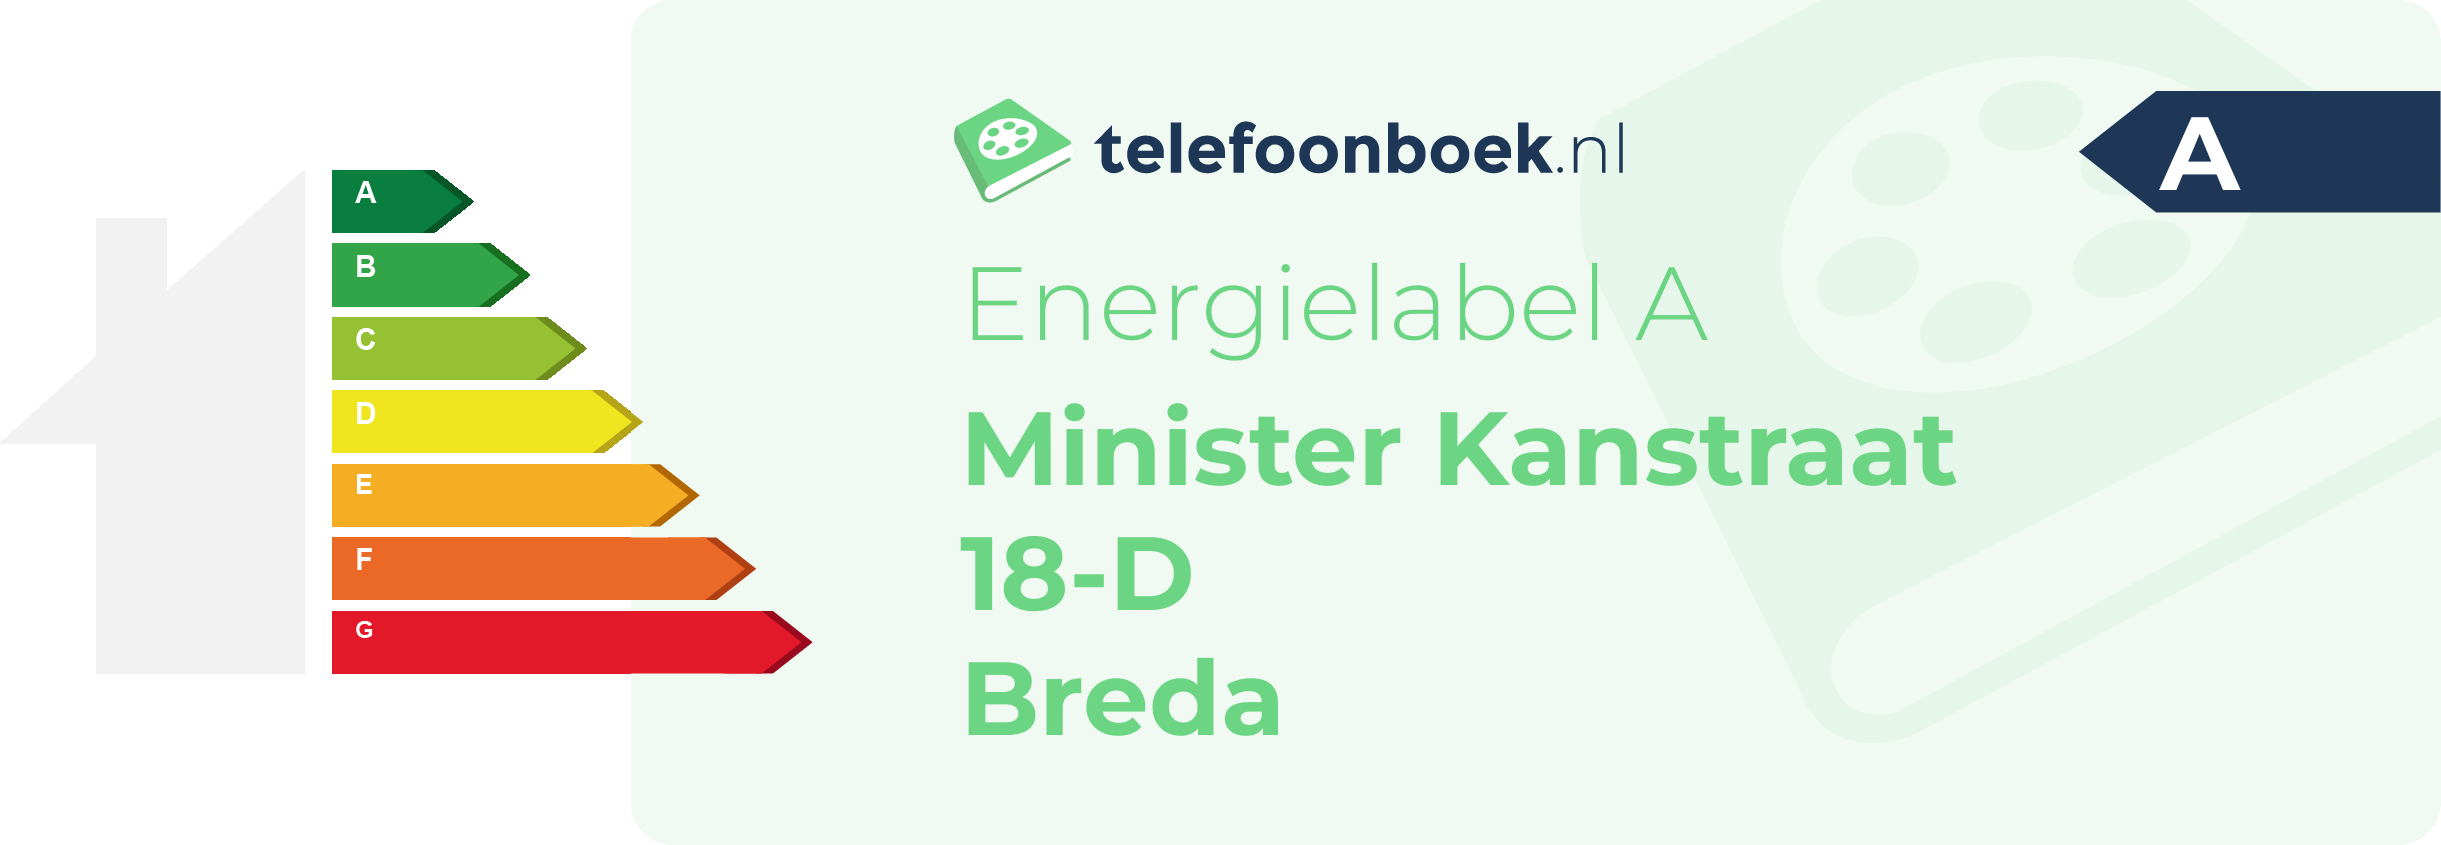 Energielabel Minister Kanstraat 18-D Breda